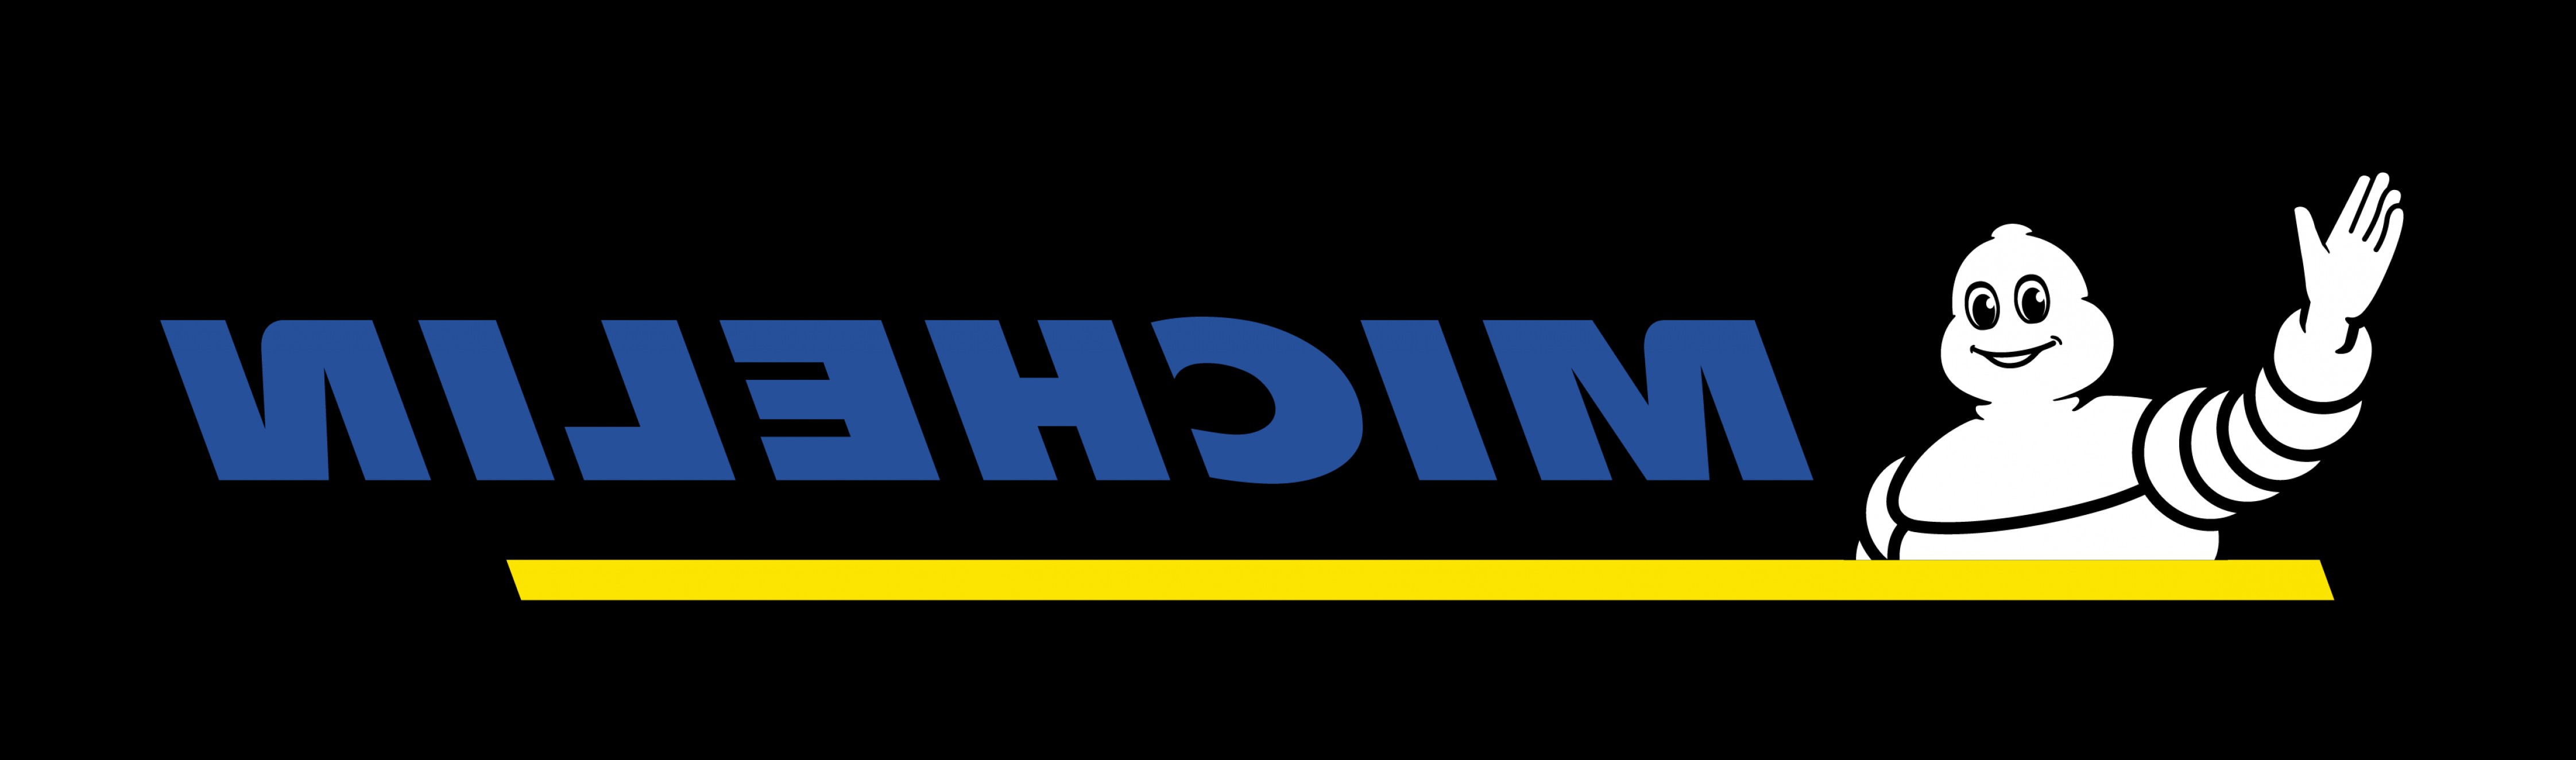 Michelin logo. Michelin шины логотип. Мишлен логотип вектор. Мишлен надпись.